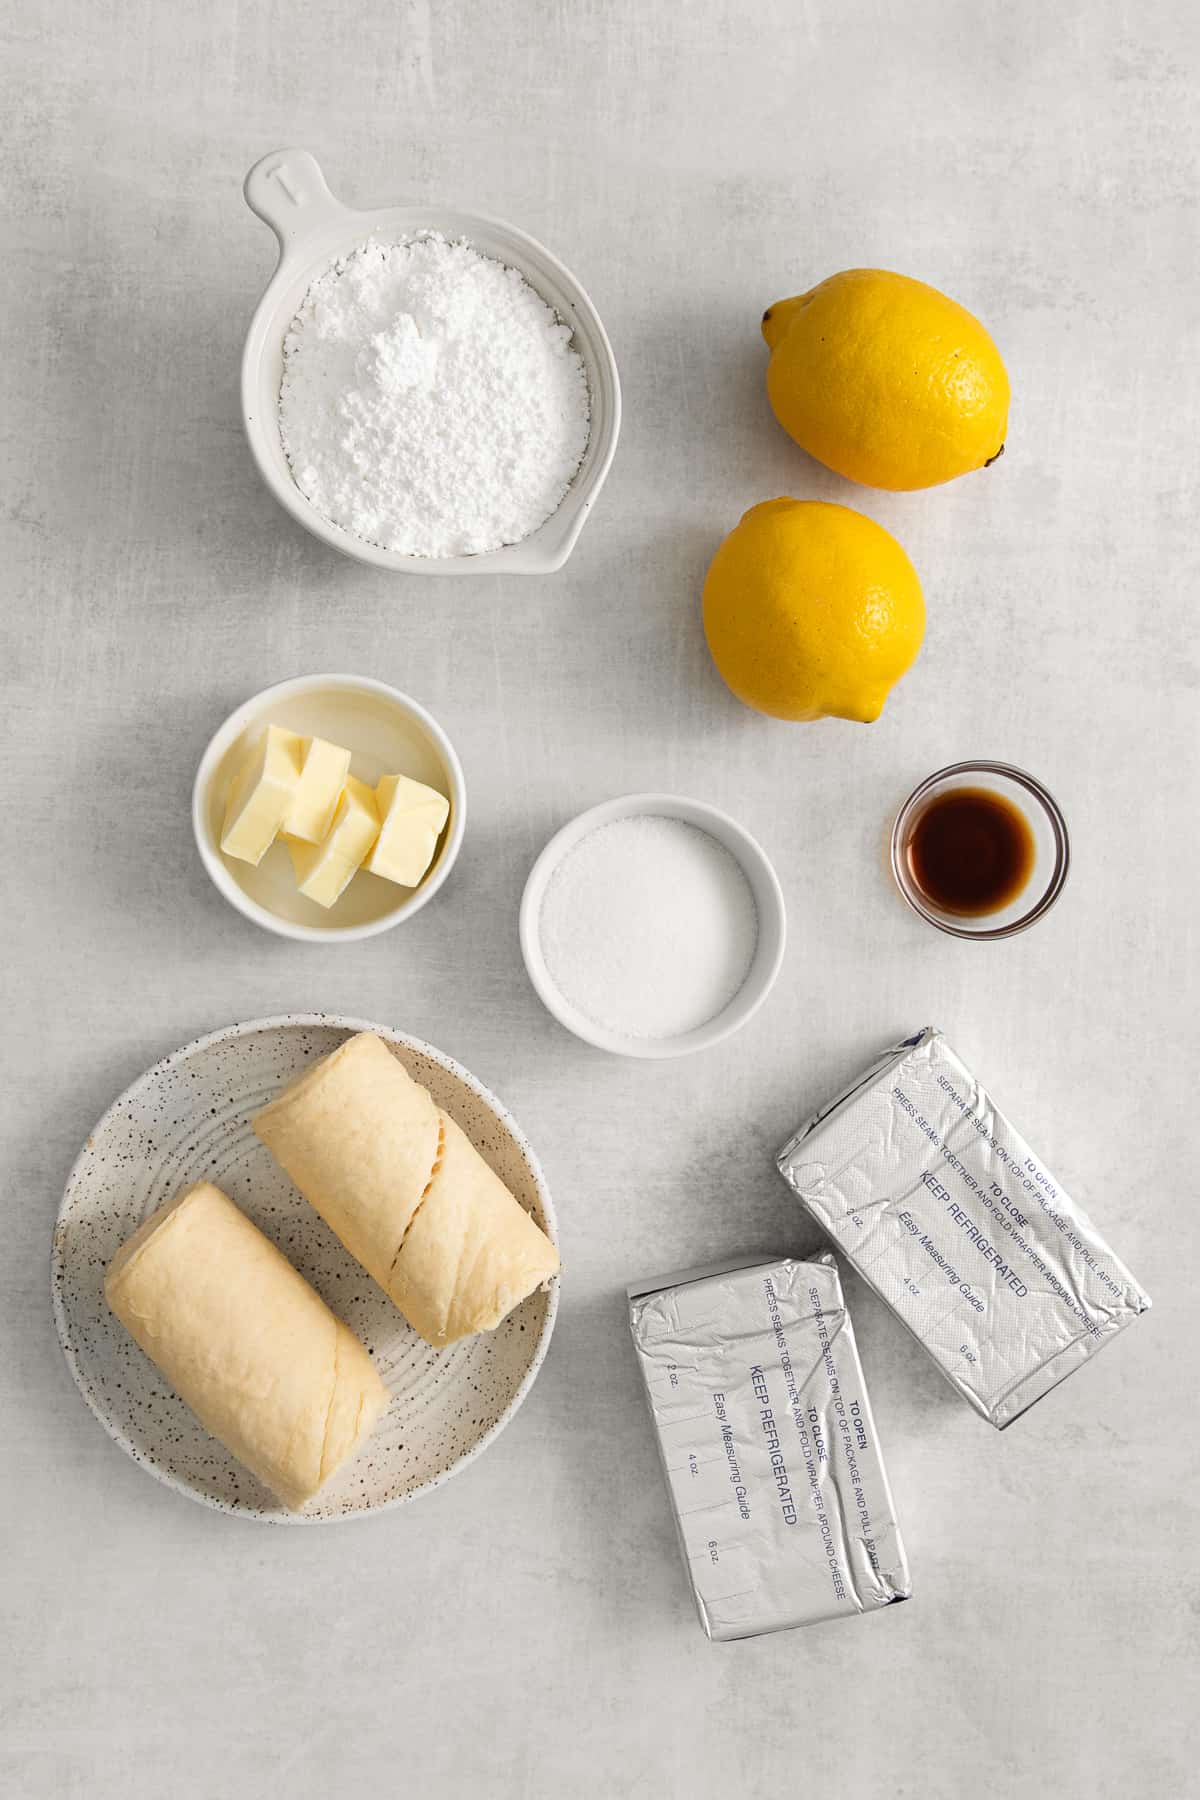 Ingredients for lemon cream cheese bars.